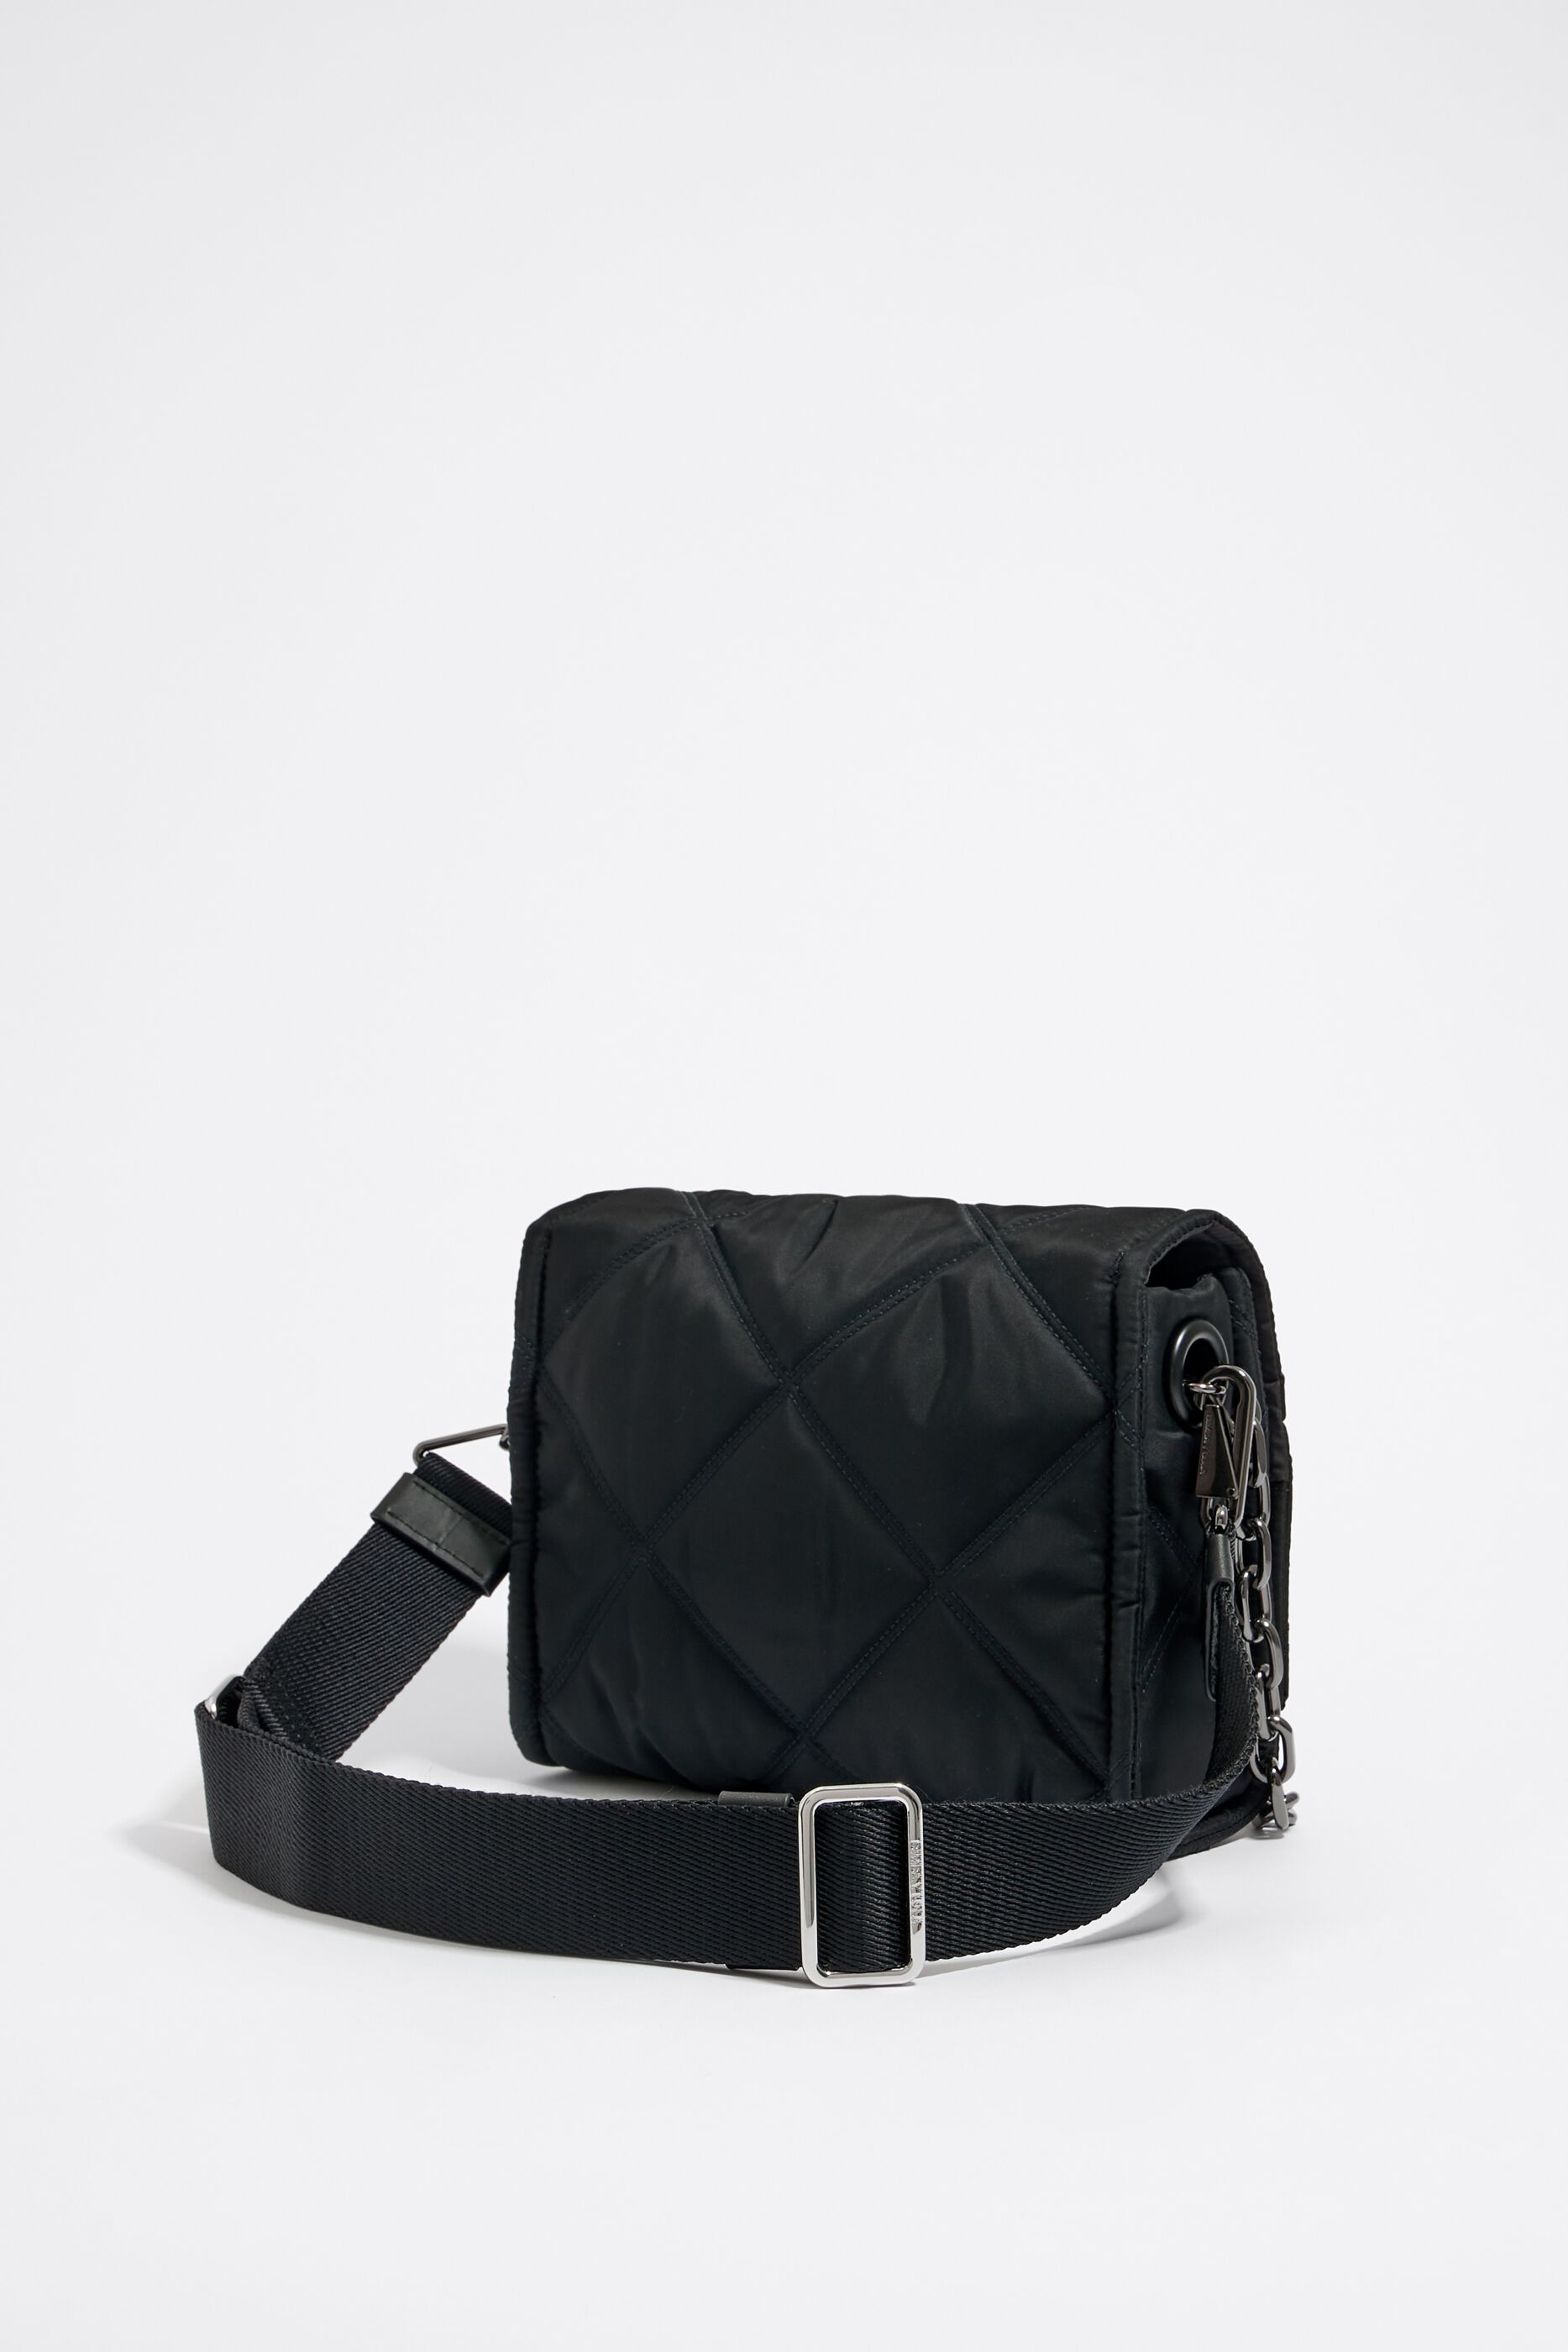 Medium black flap bag